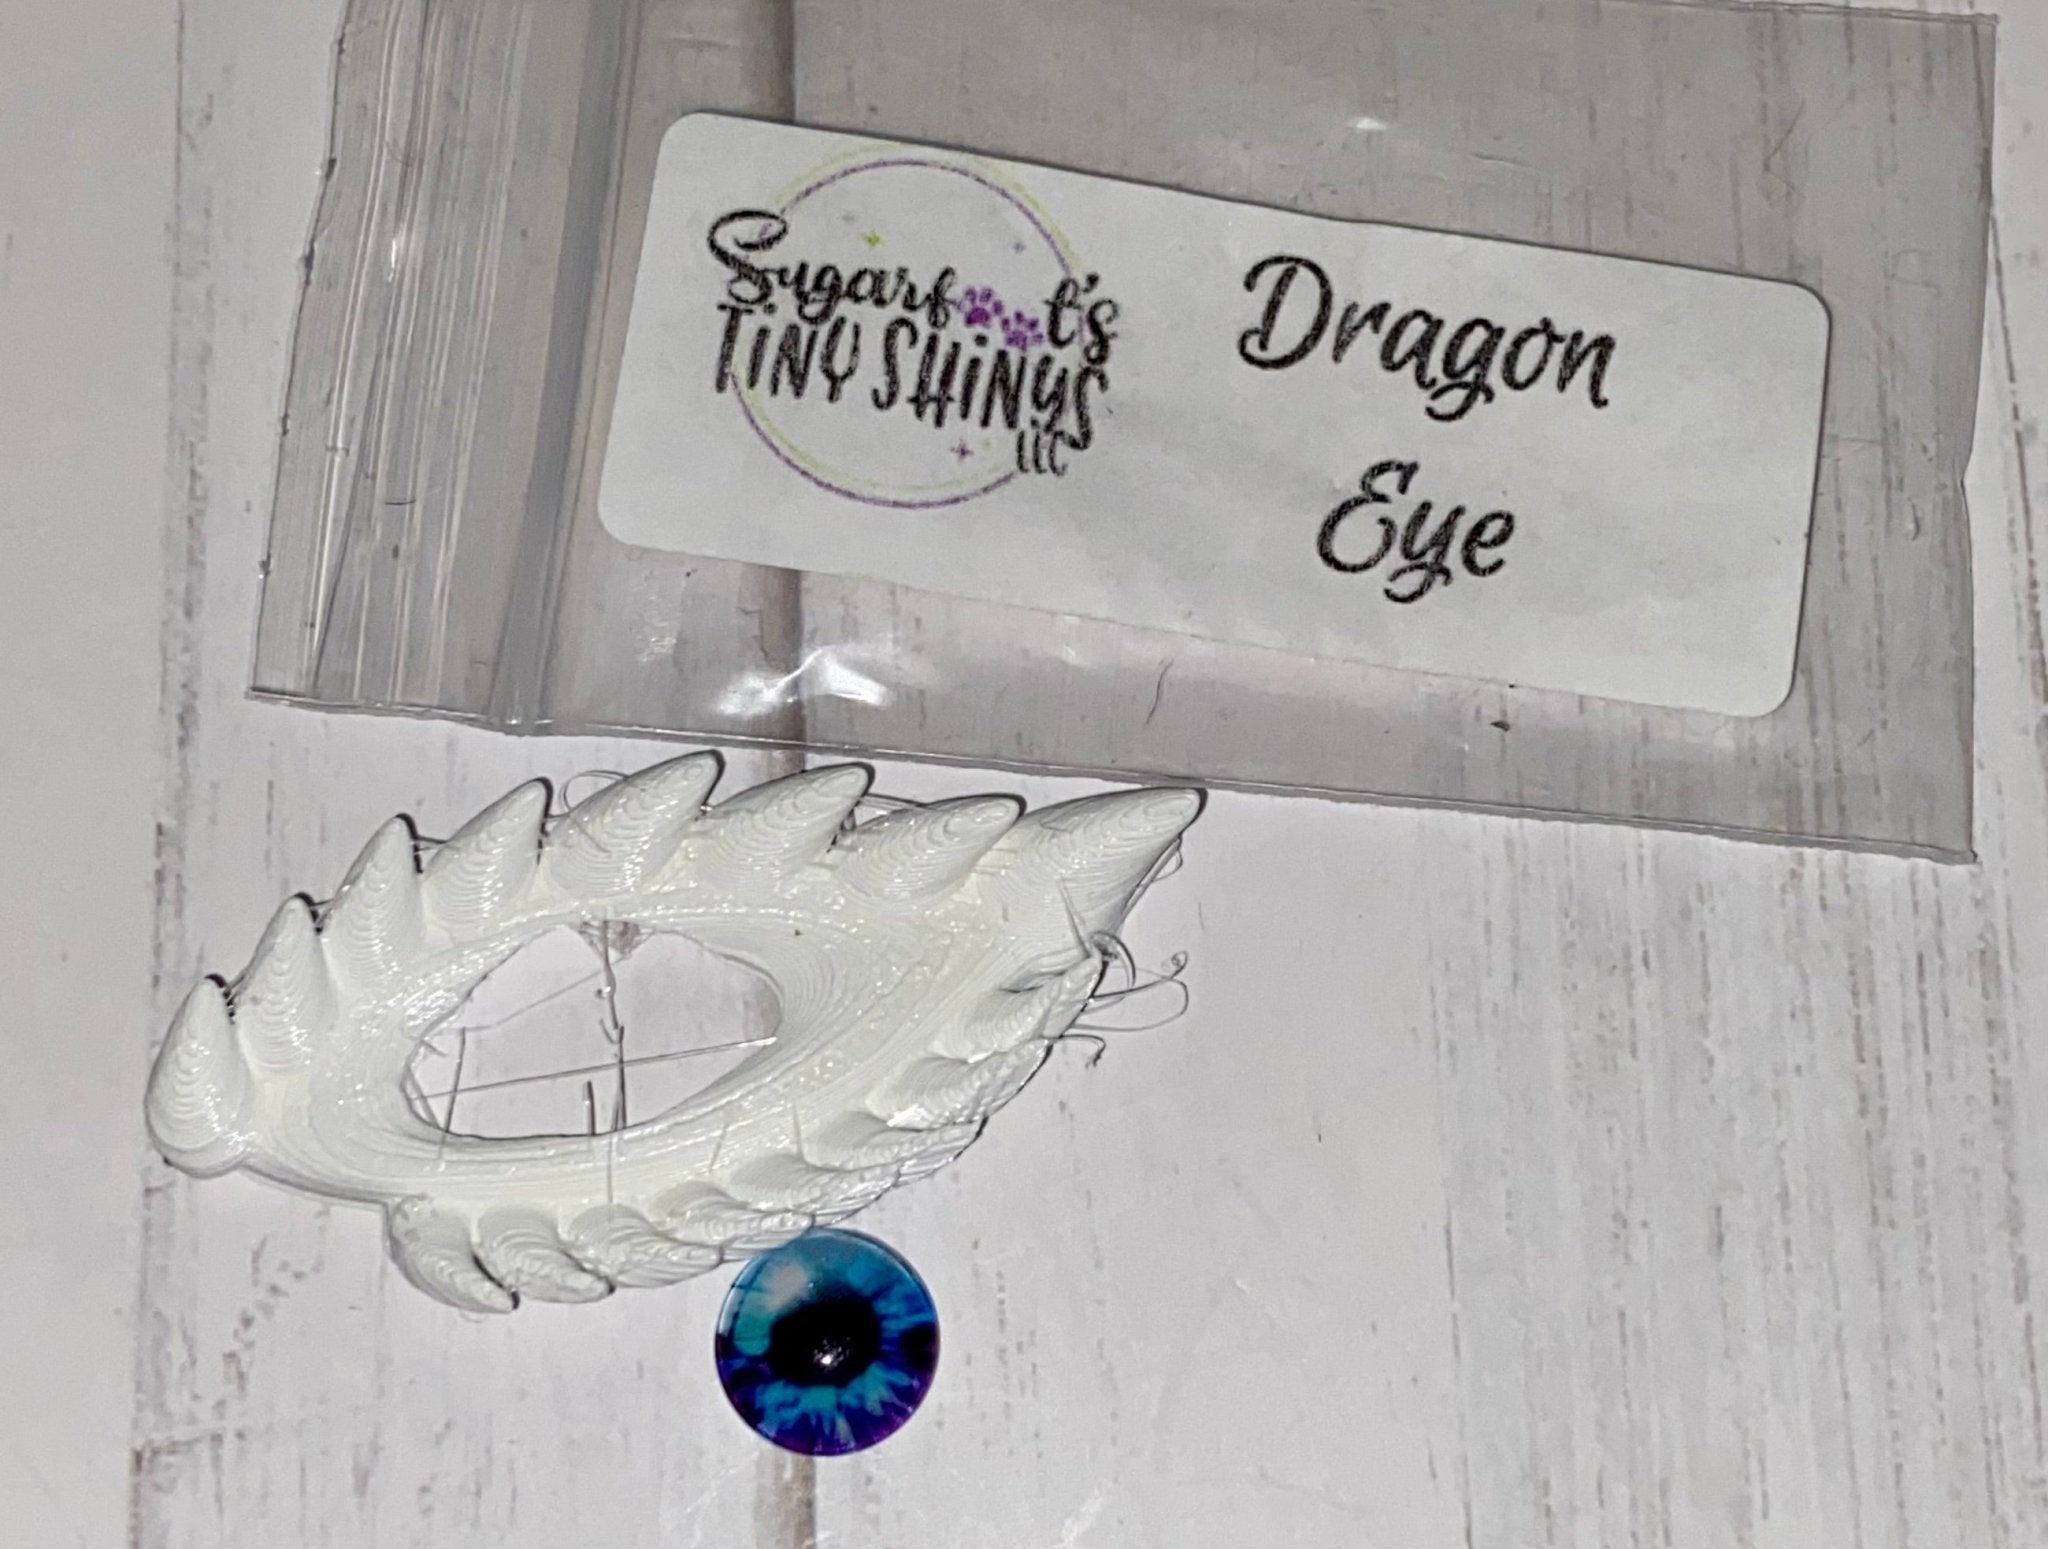 Dragon Eye - Sugarfoot's Tiny Shinys, LLC